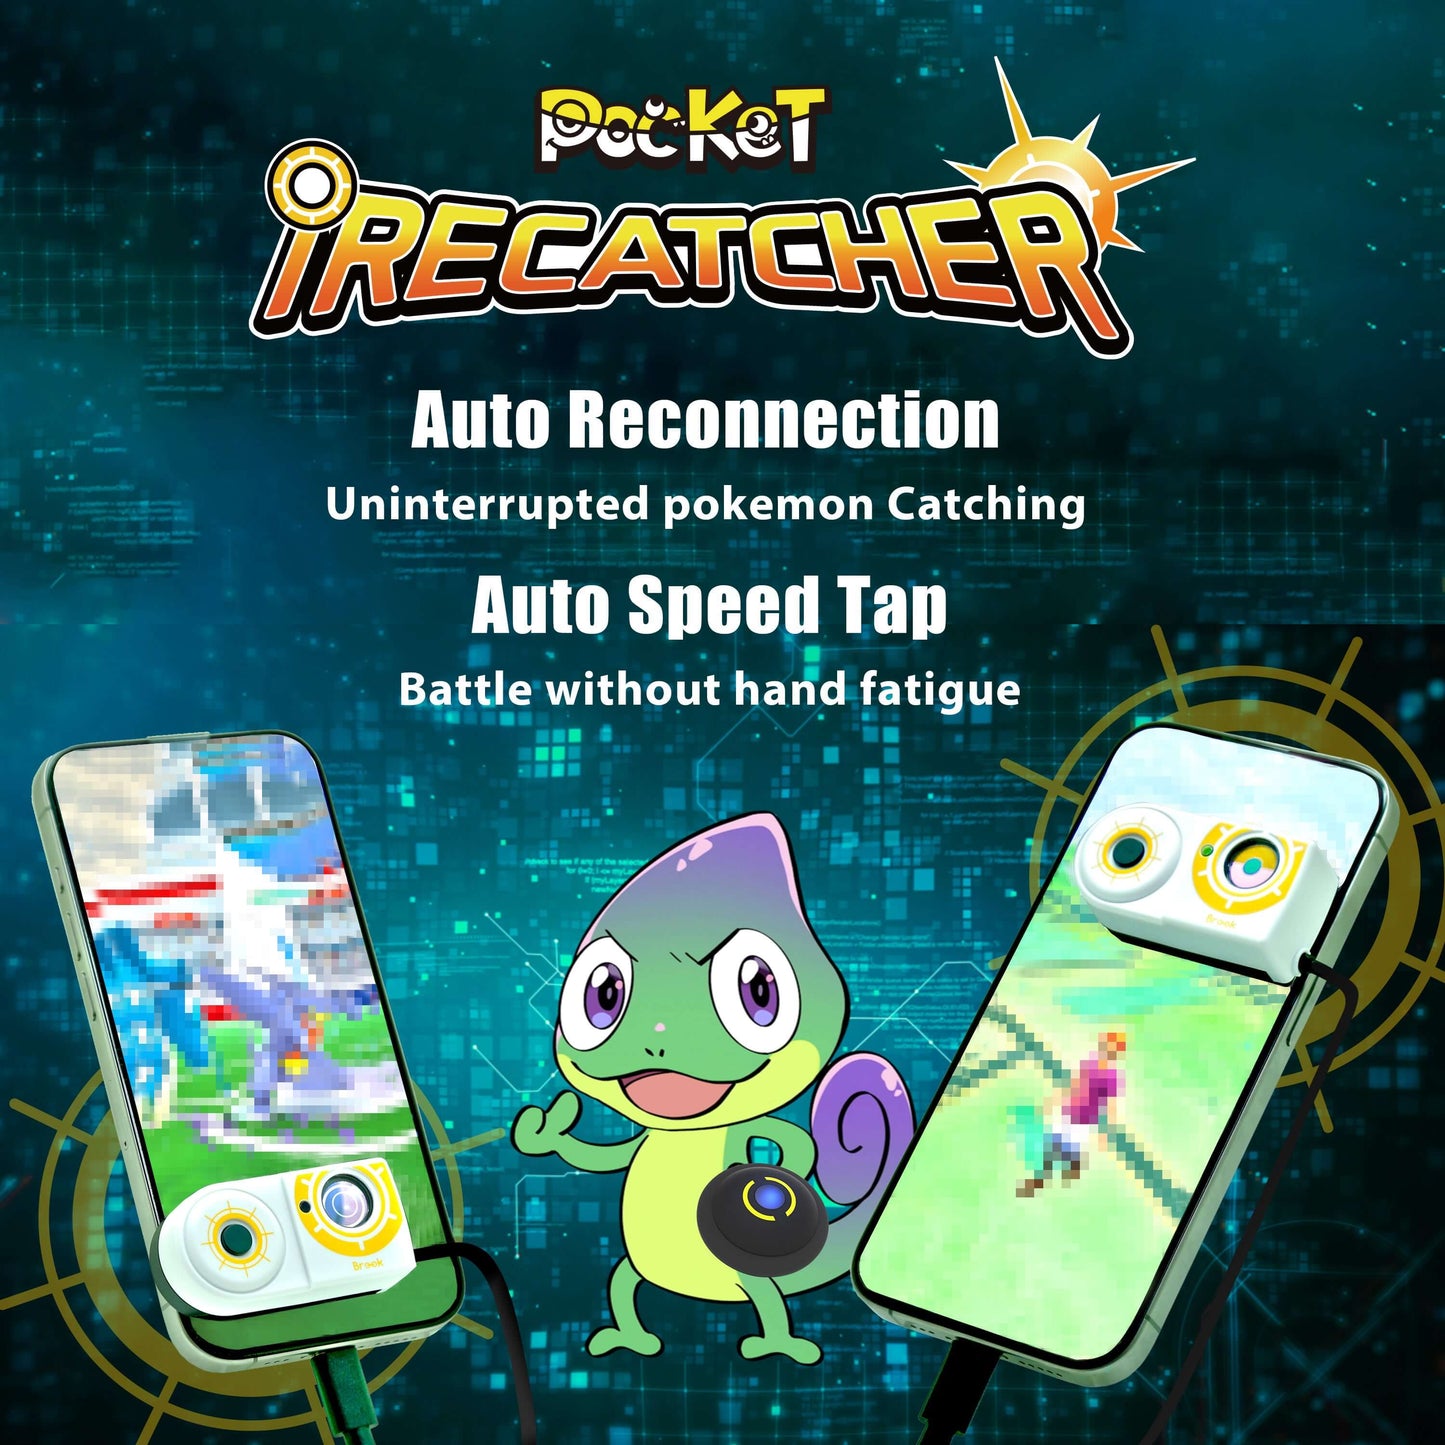 Pocket iRecatcher